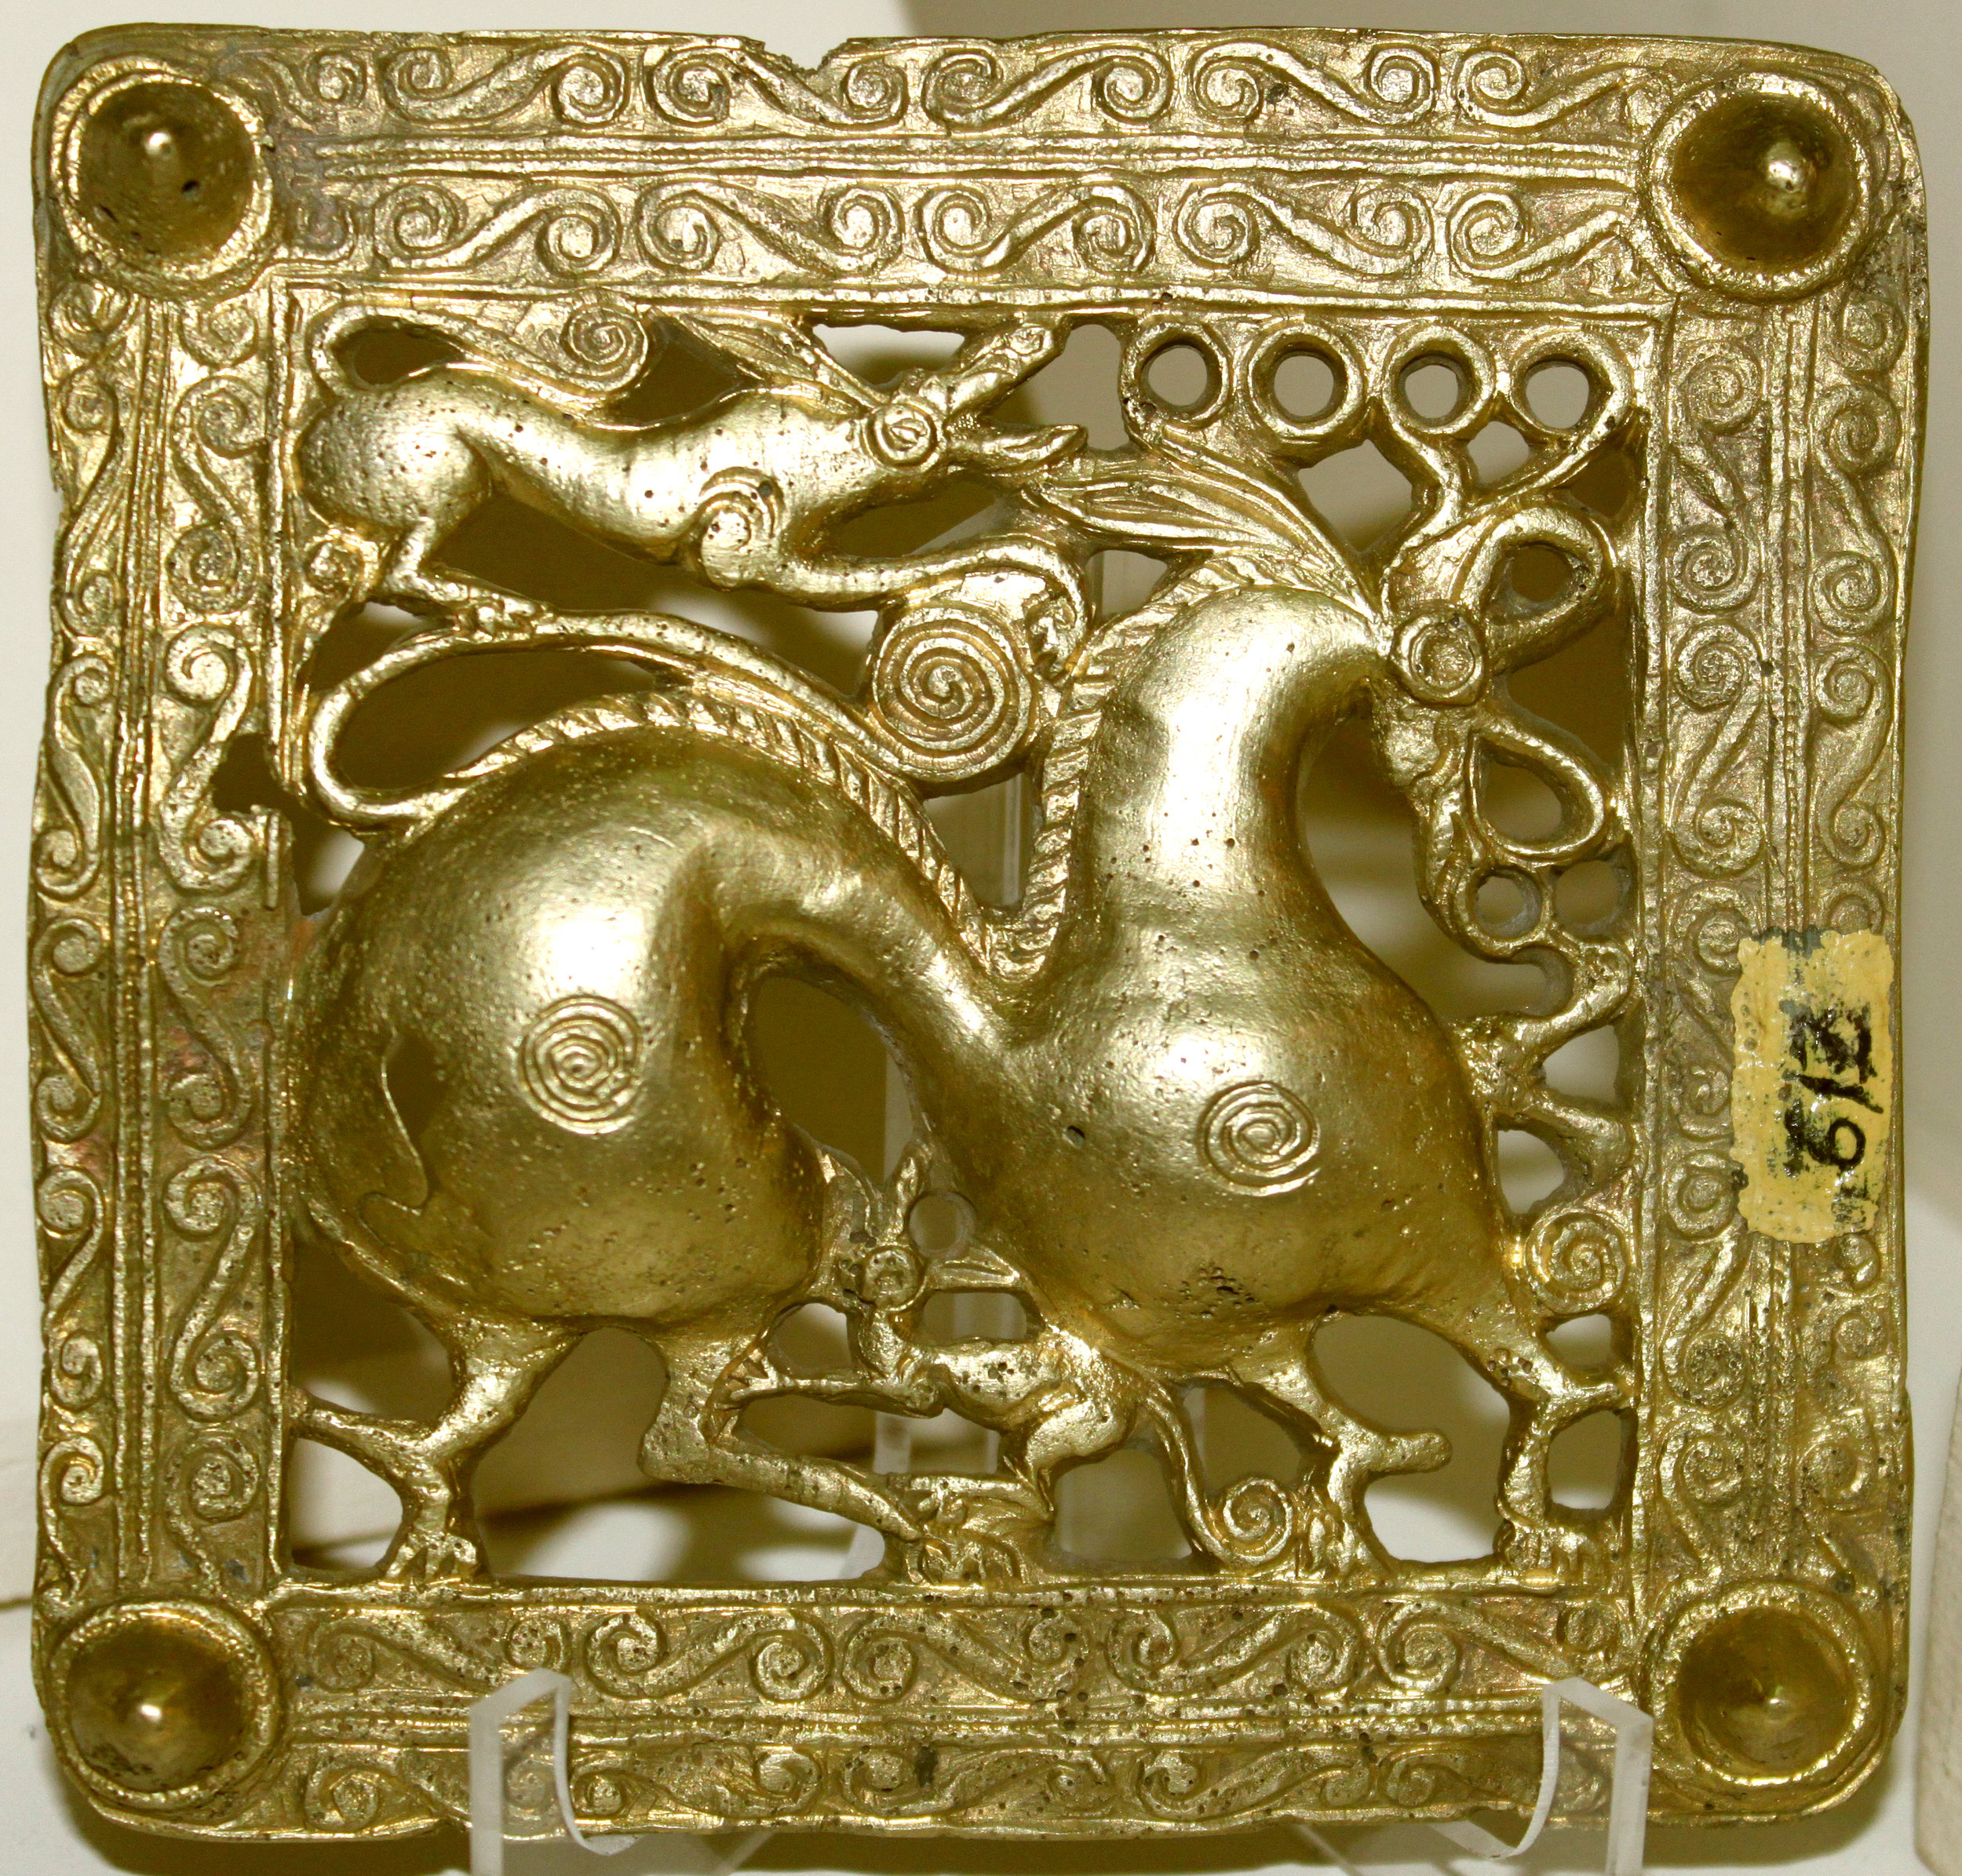  Gold Scythian belt title from Mingachevir (ancient Scythian kingdom), Azerbaijan, and the 7th century BC. Wikicommons 